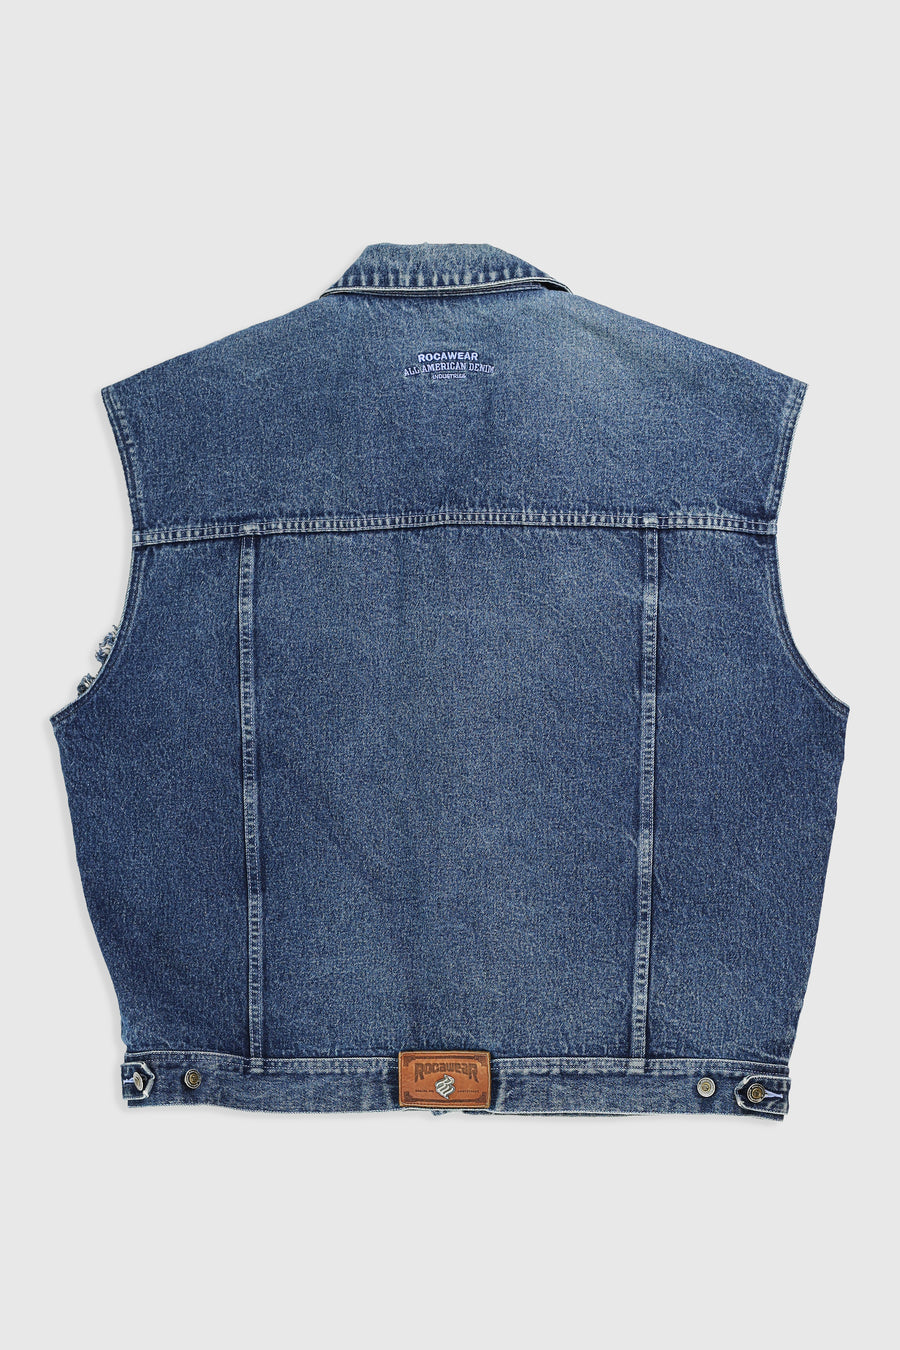 Vintage Rocawear Denim Vest - 2XL